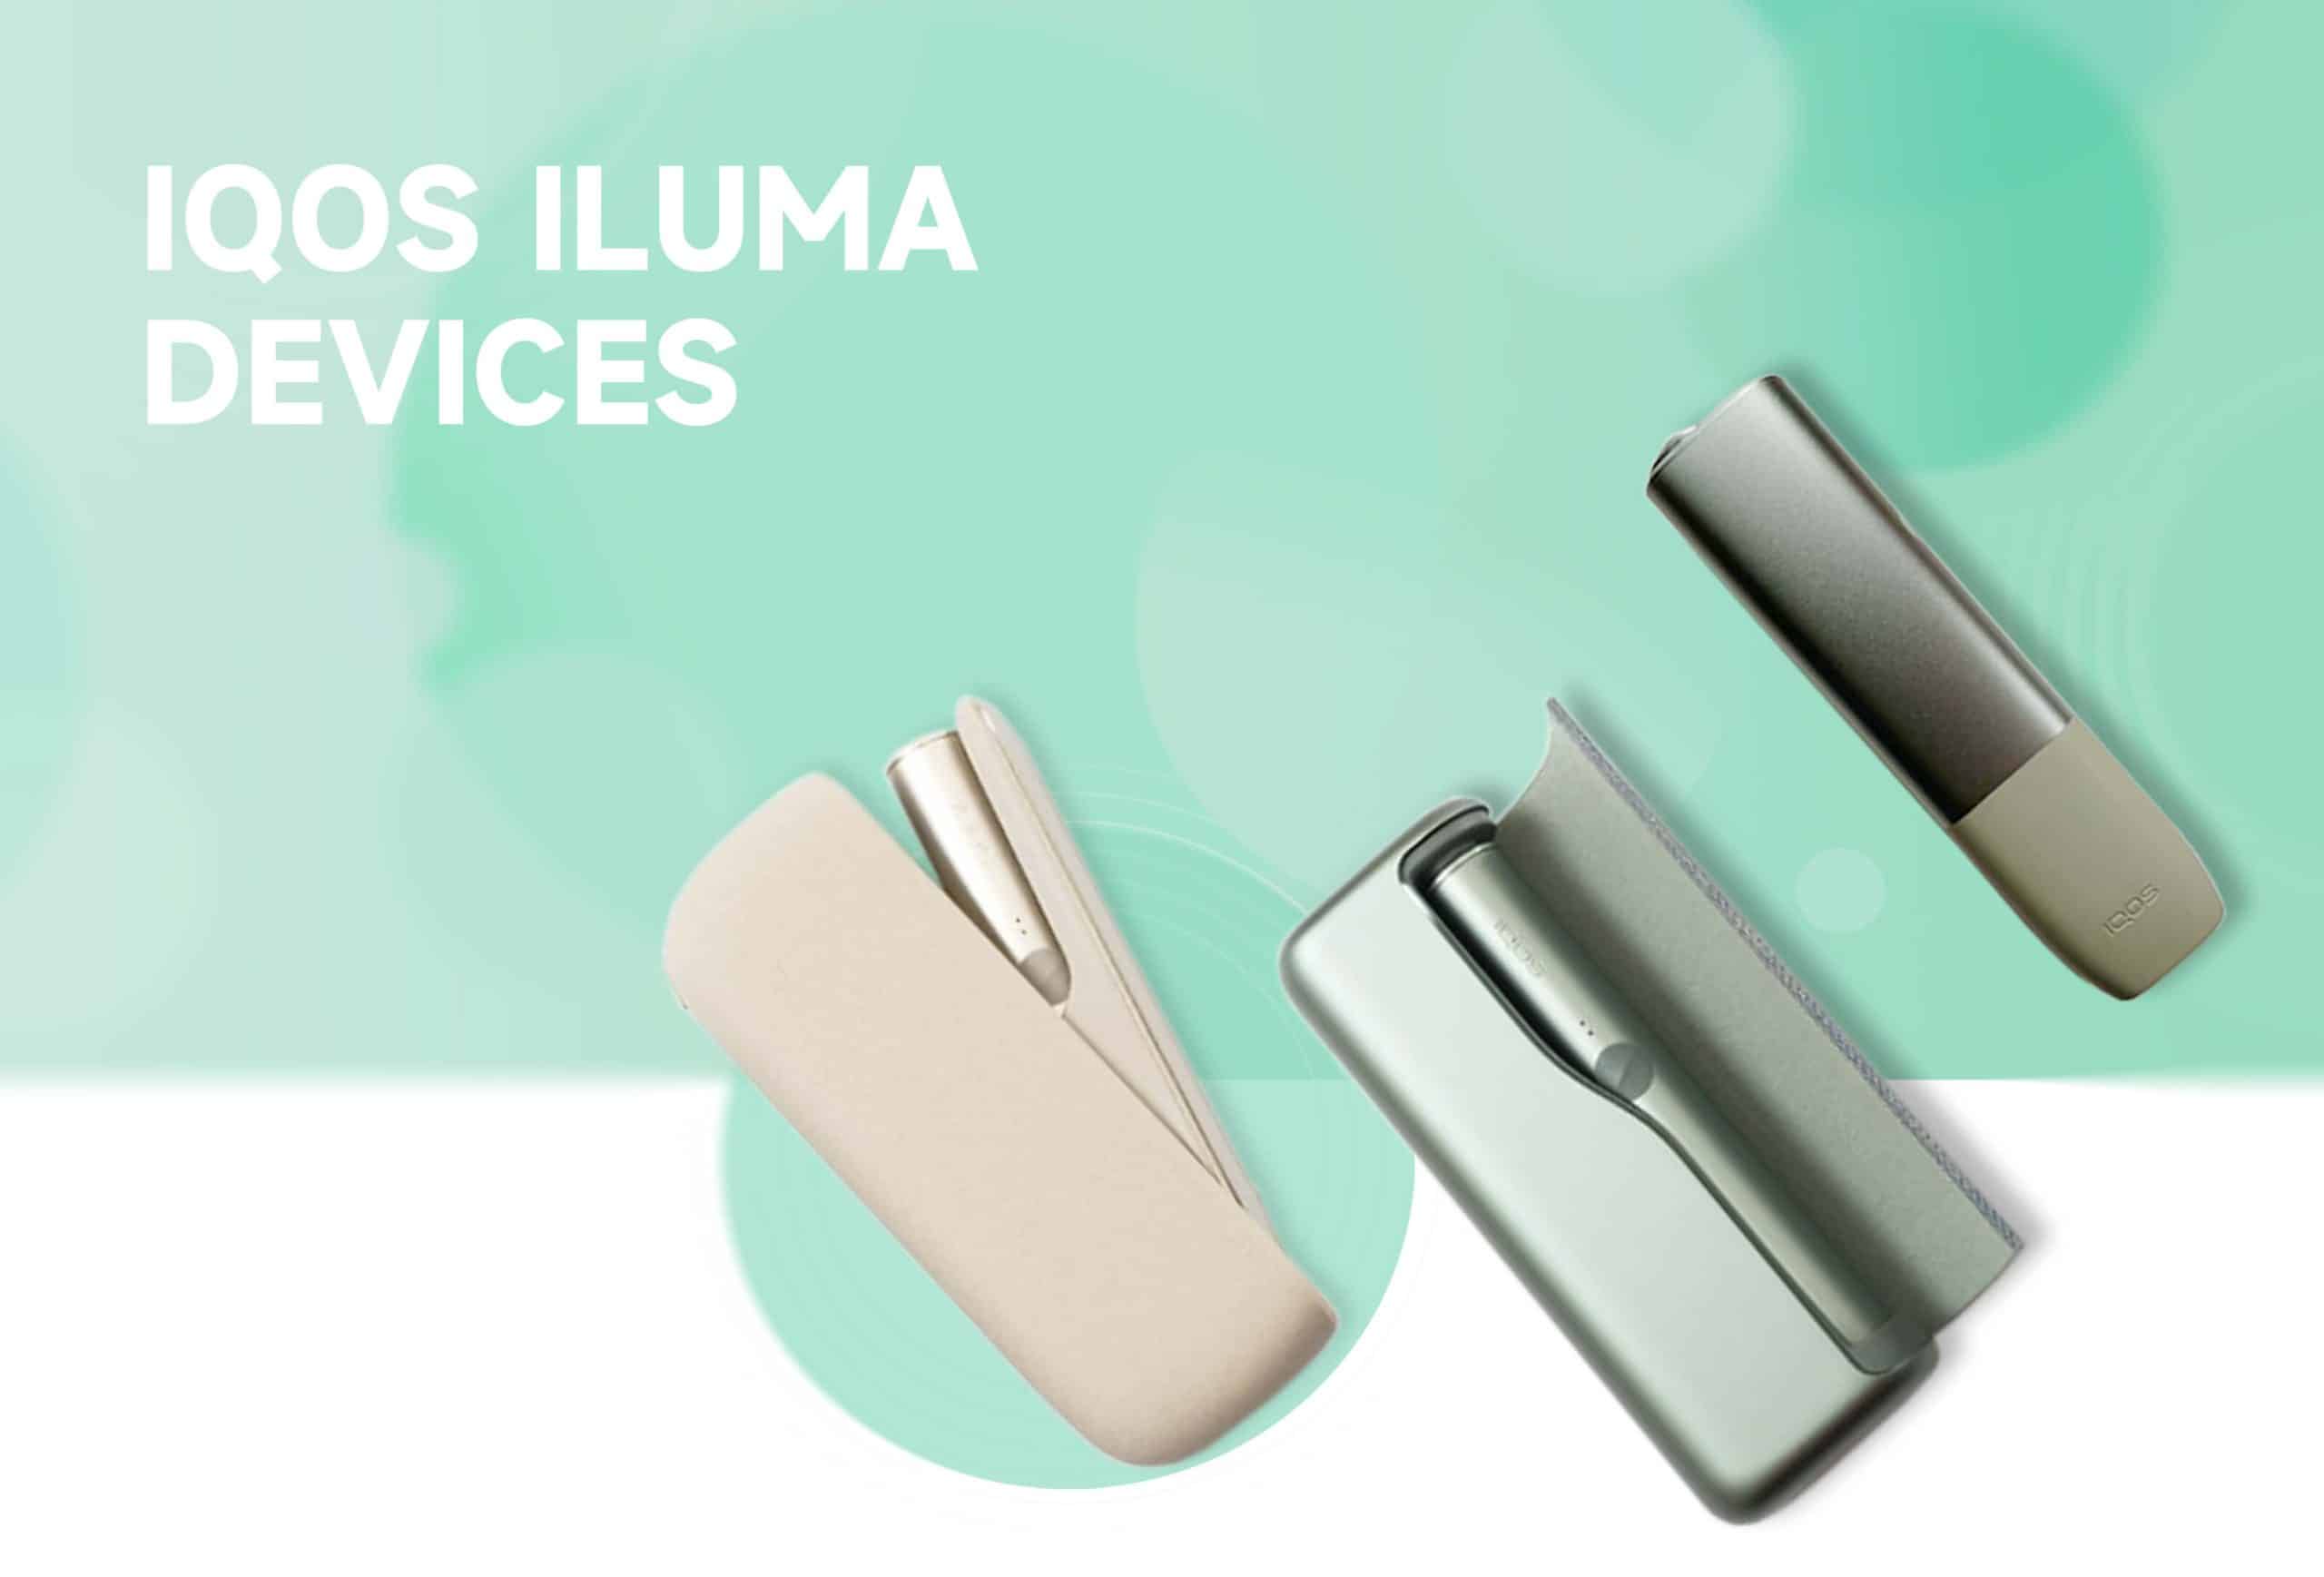 Compare IQOS ILUMA devices